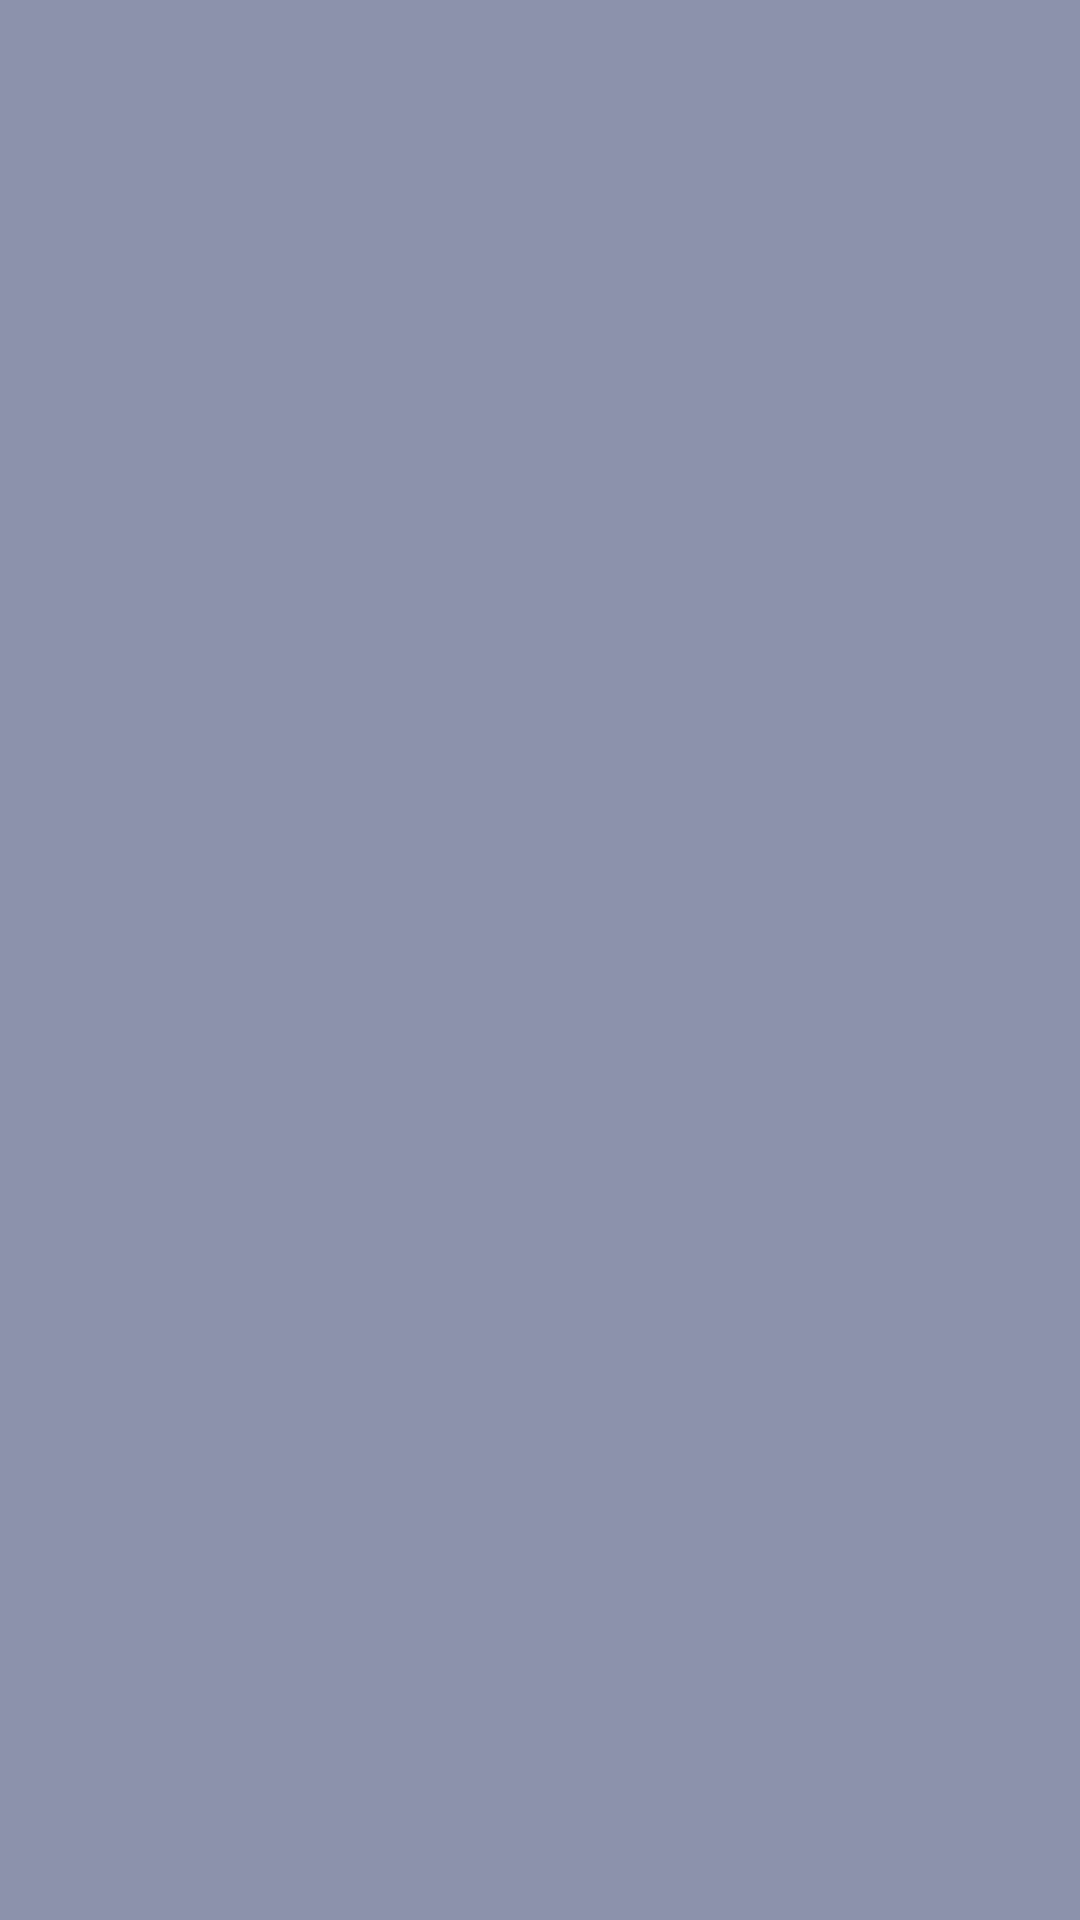 Bluish Solid Grey Color Background Background